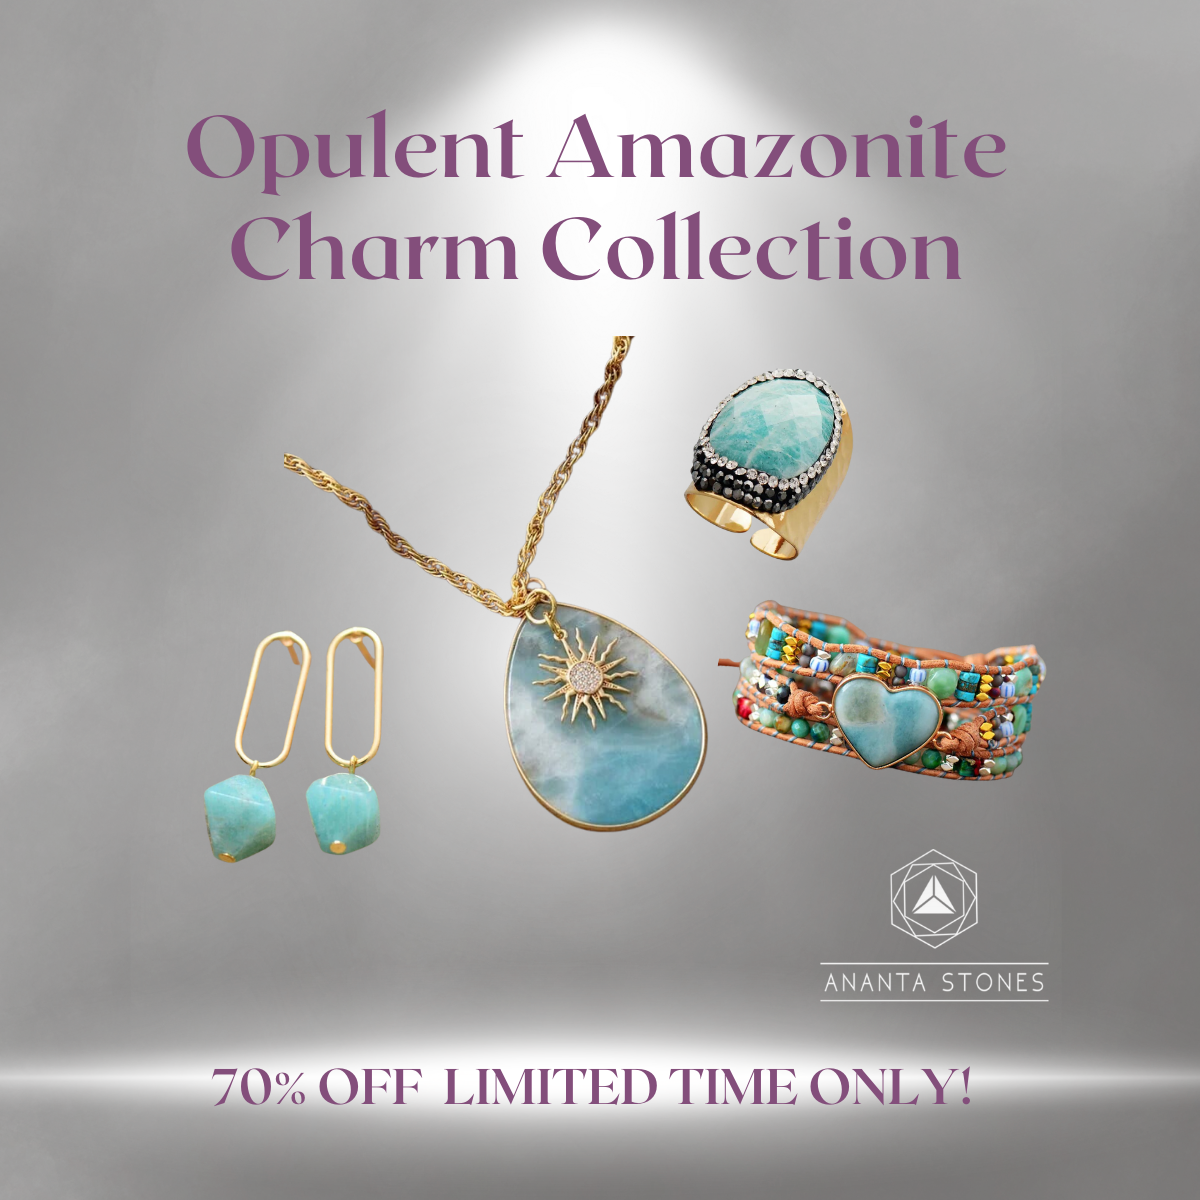 Opulent Amazonite Charm Collection